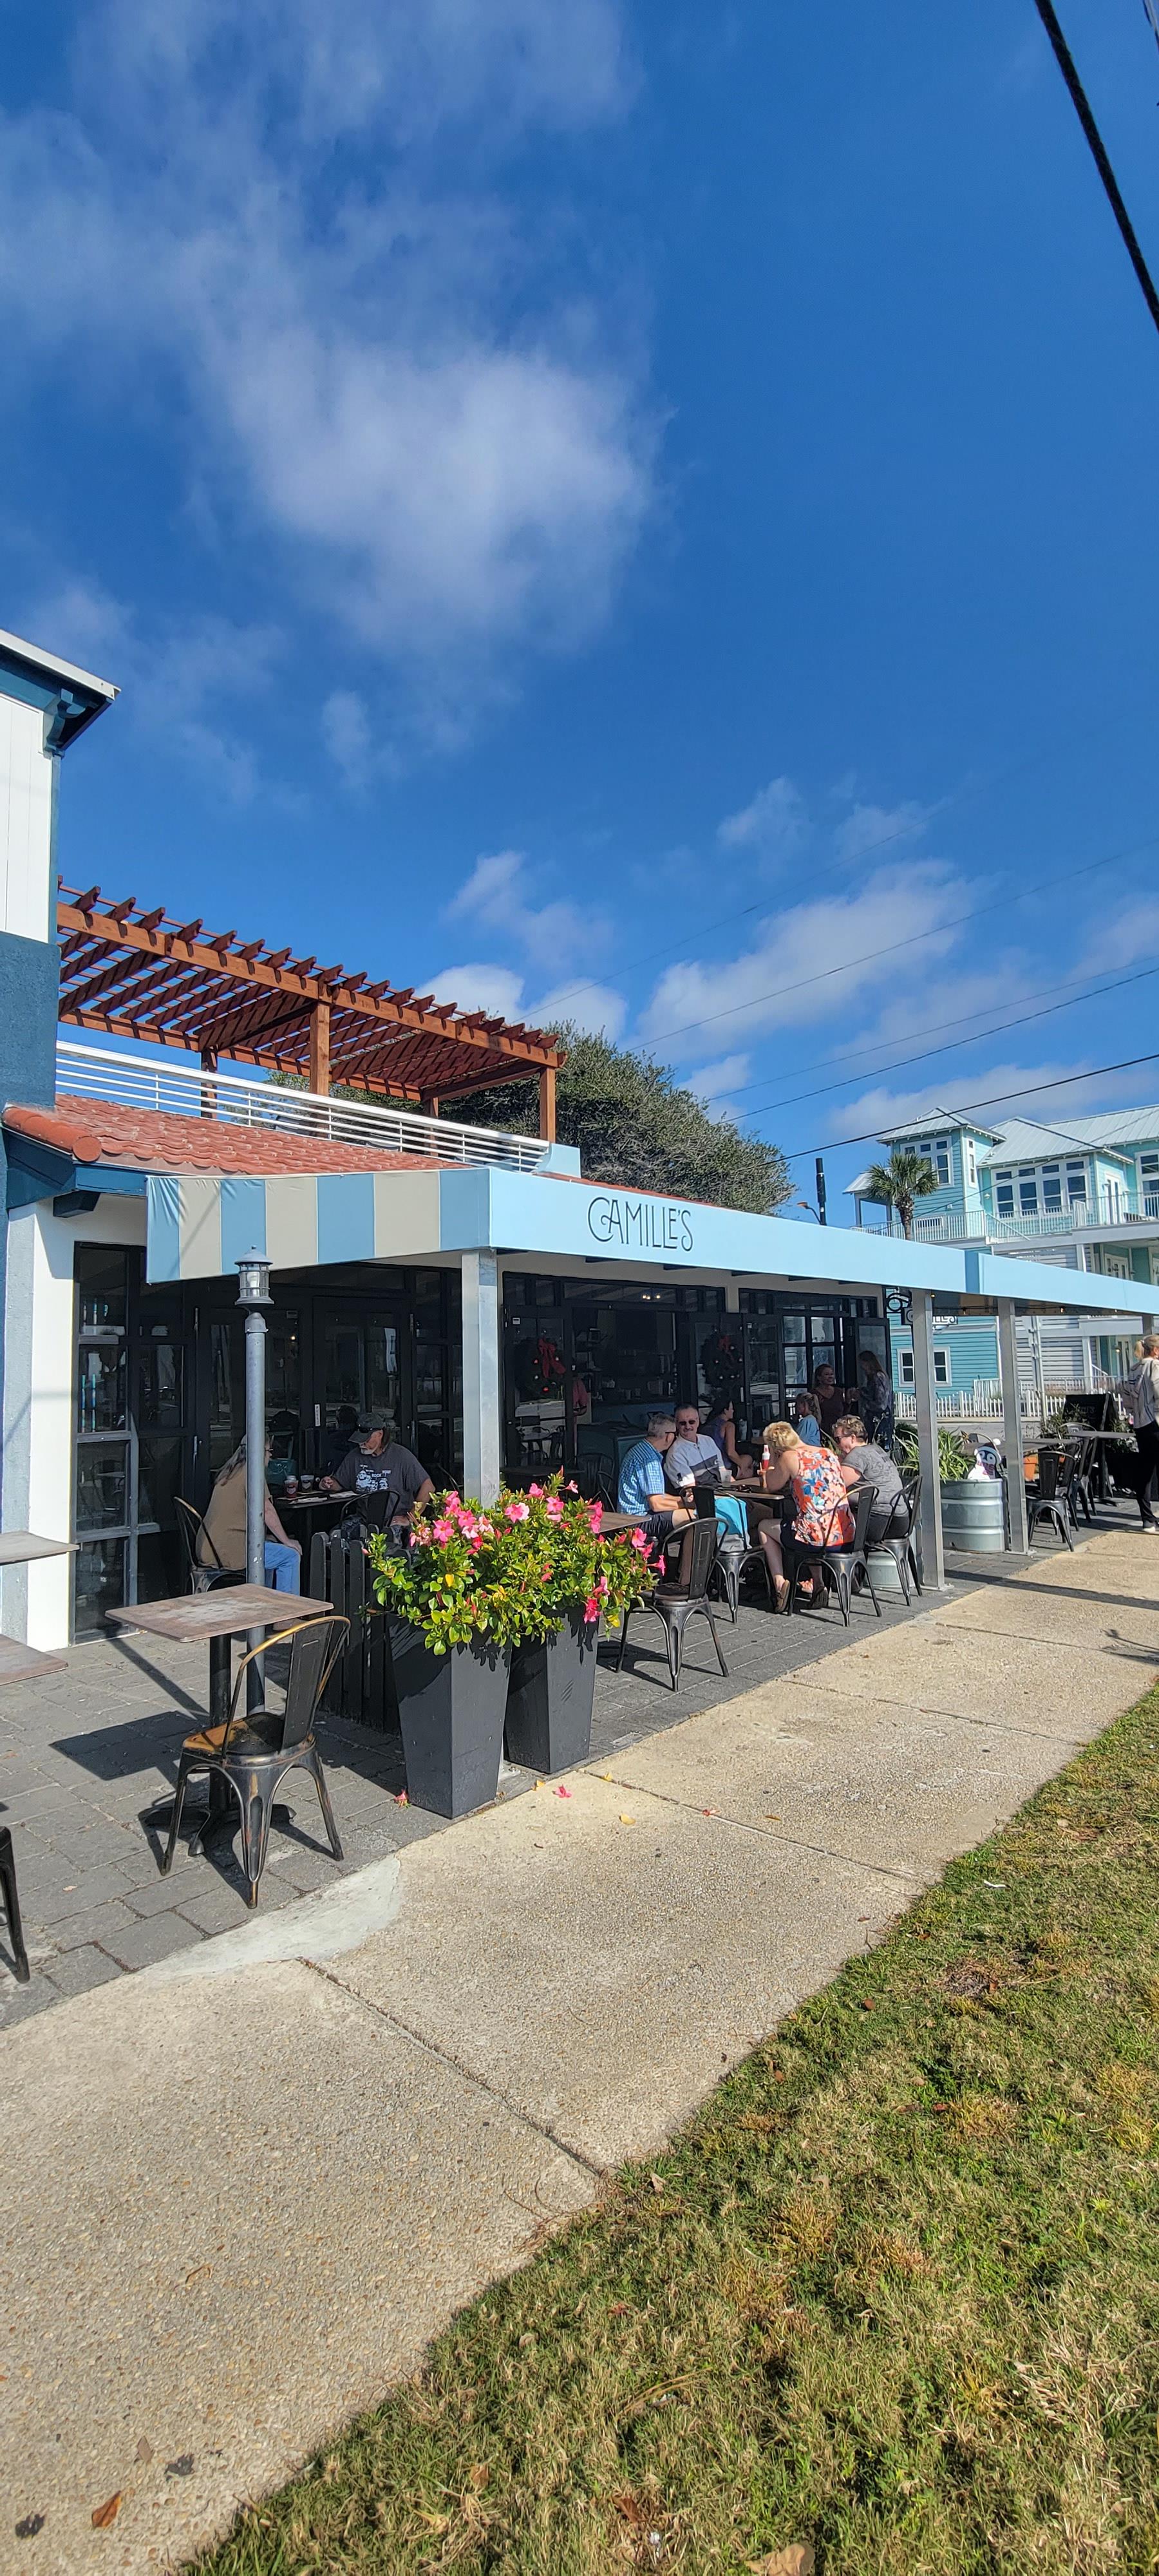 Camilles Cafe and Beach bar